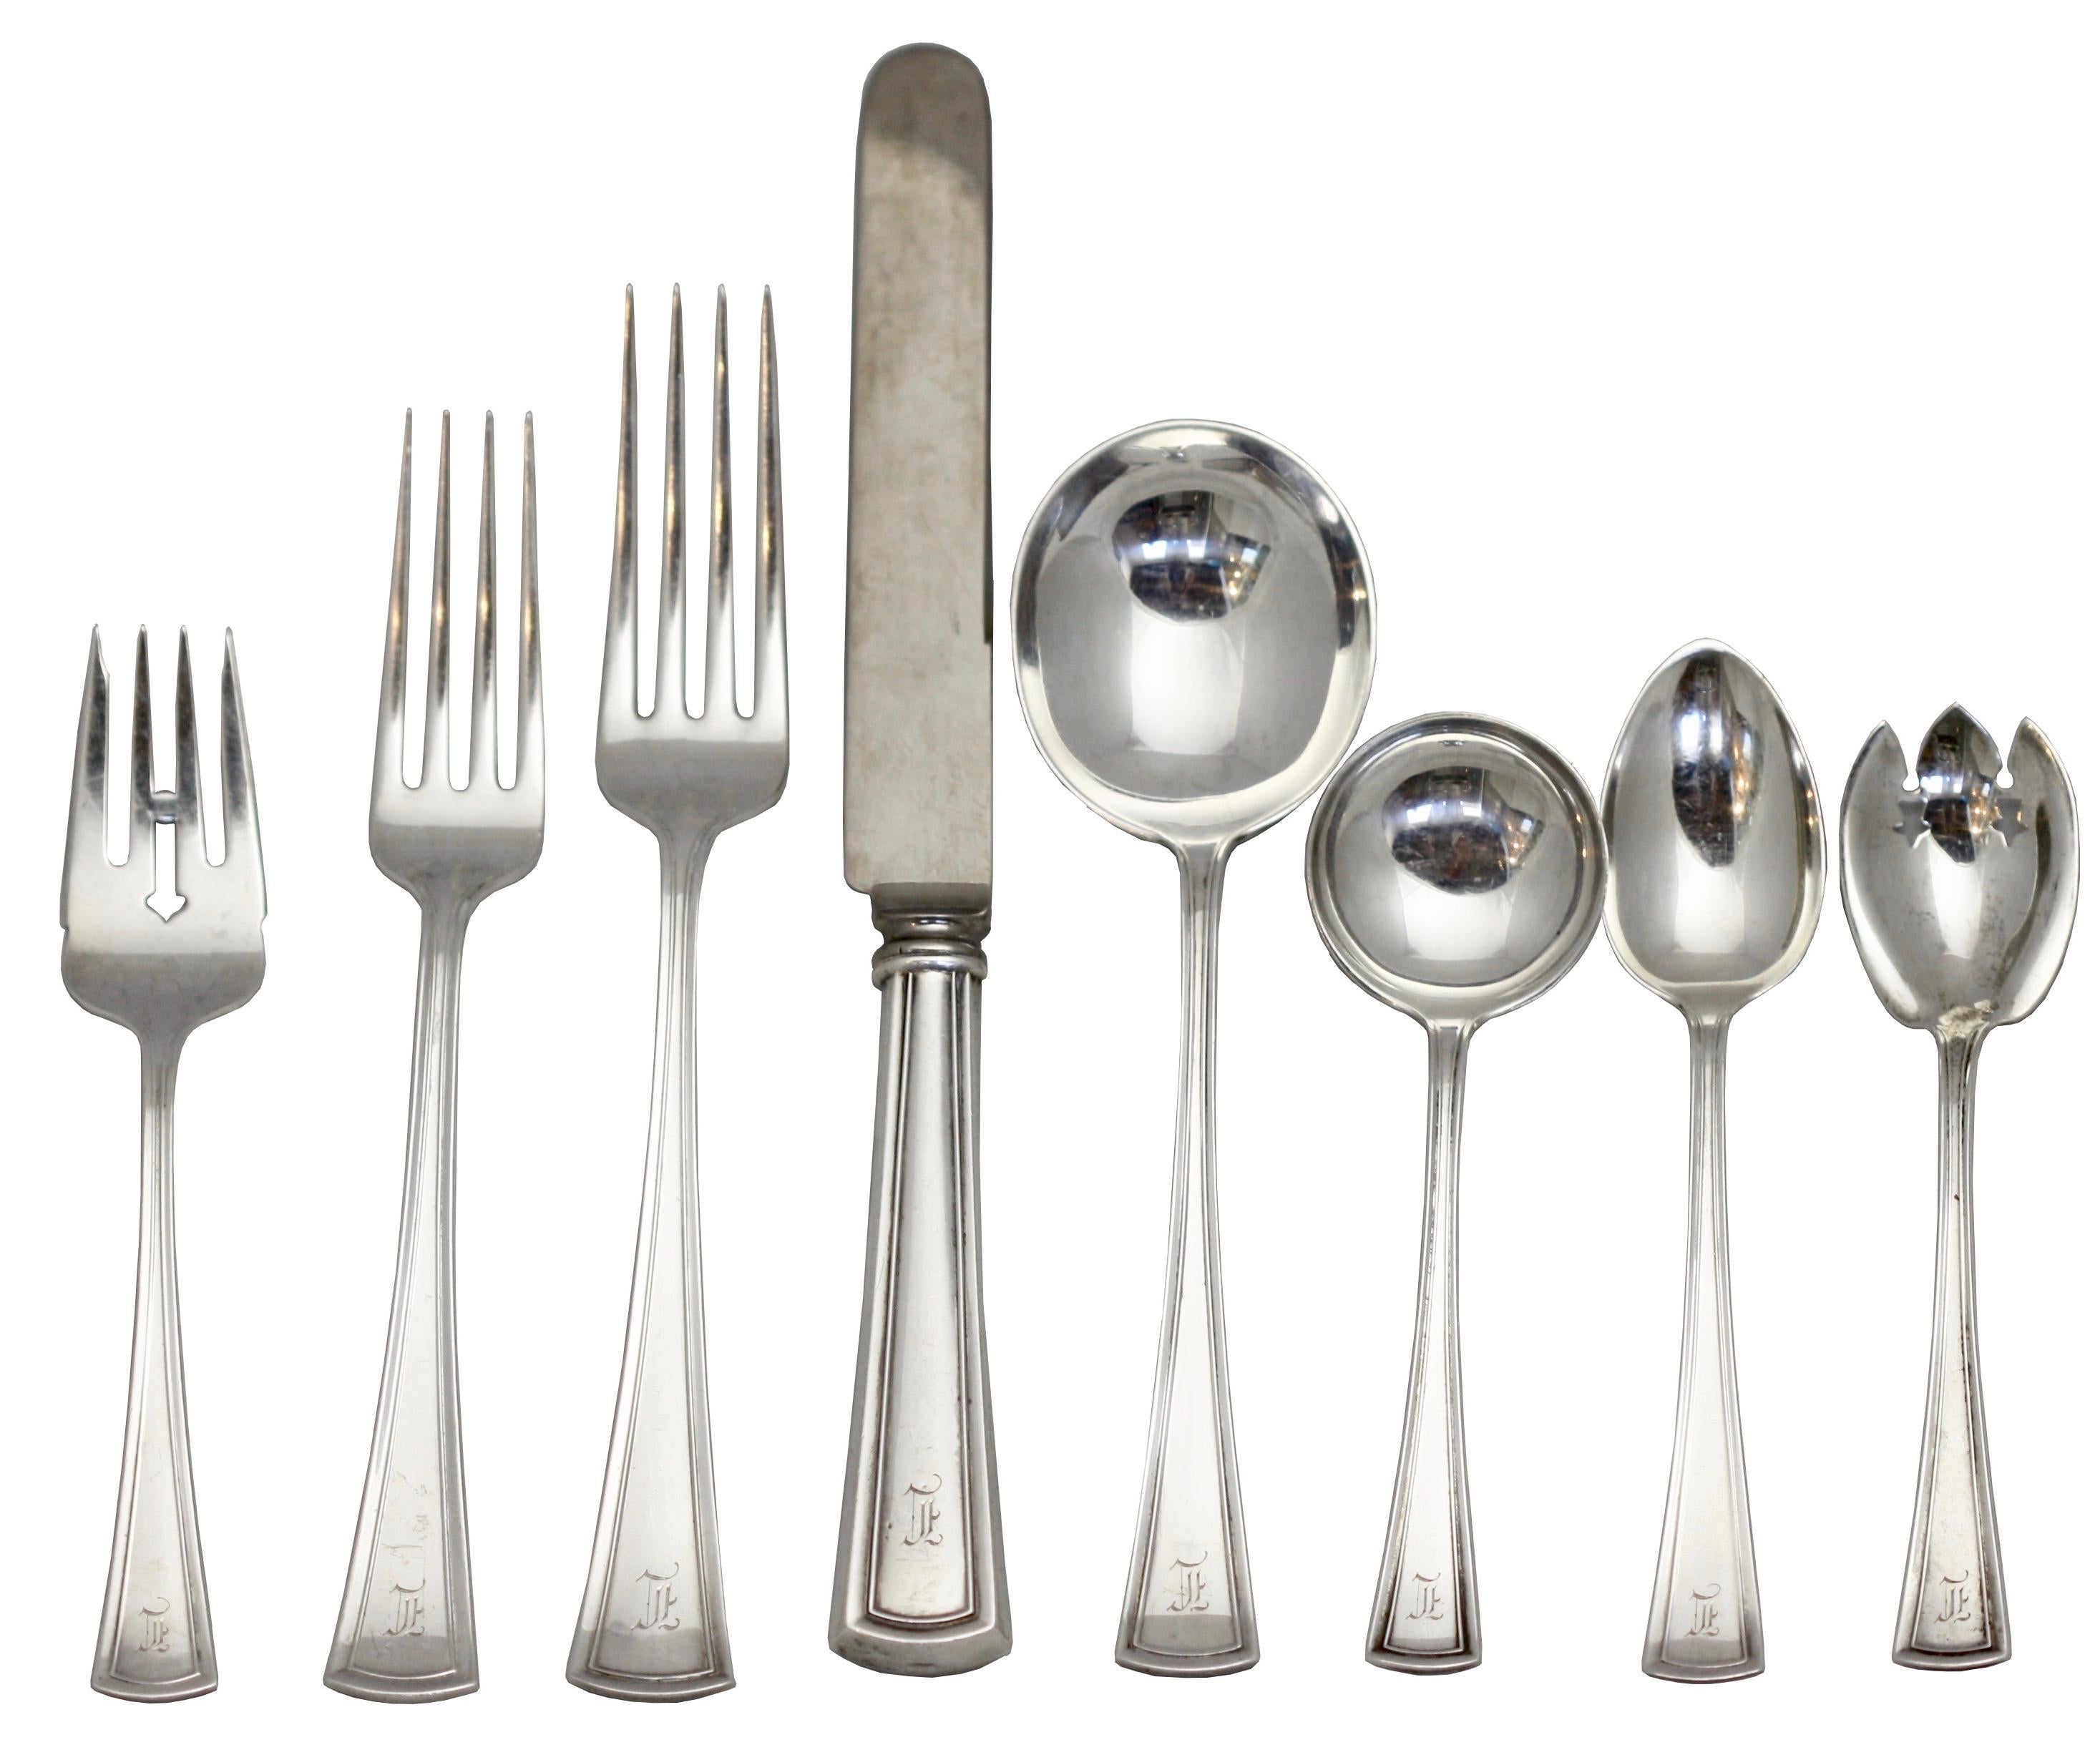 Dominick & Haff sterling silver flatware, Virginia pattern 1912 (100 piece set) 
5 dinner forks (7 3/4 in.)
9 luncheon forks (7 1/8 in.)
15 desert forks (6 in.)
10 cream forks (5 3/8 in.)
12 cream soup spoons (5 1/4 in.)
12 bullion spoons (6